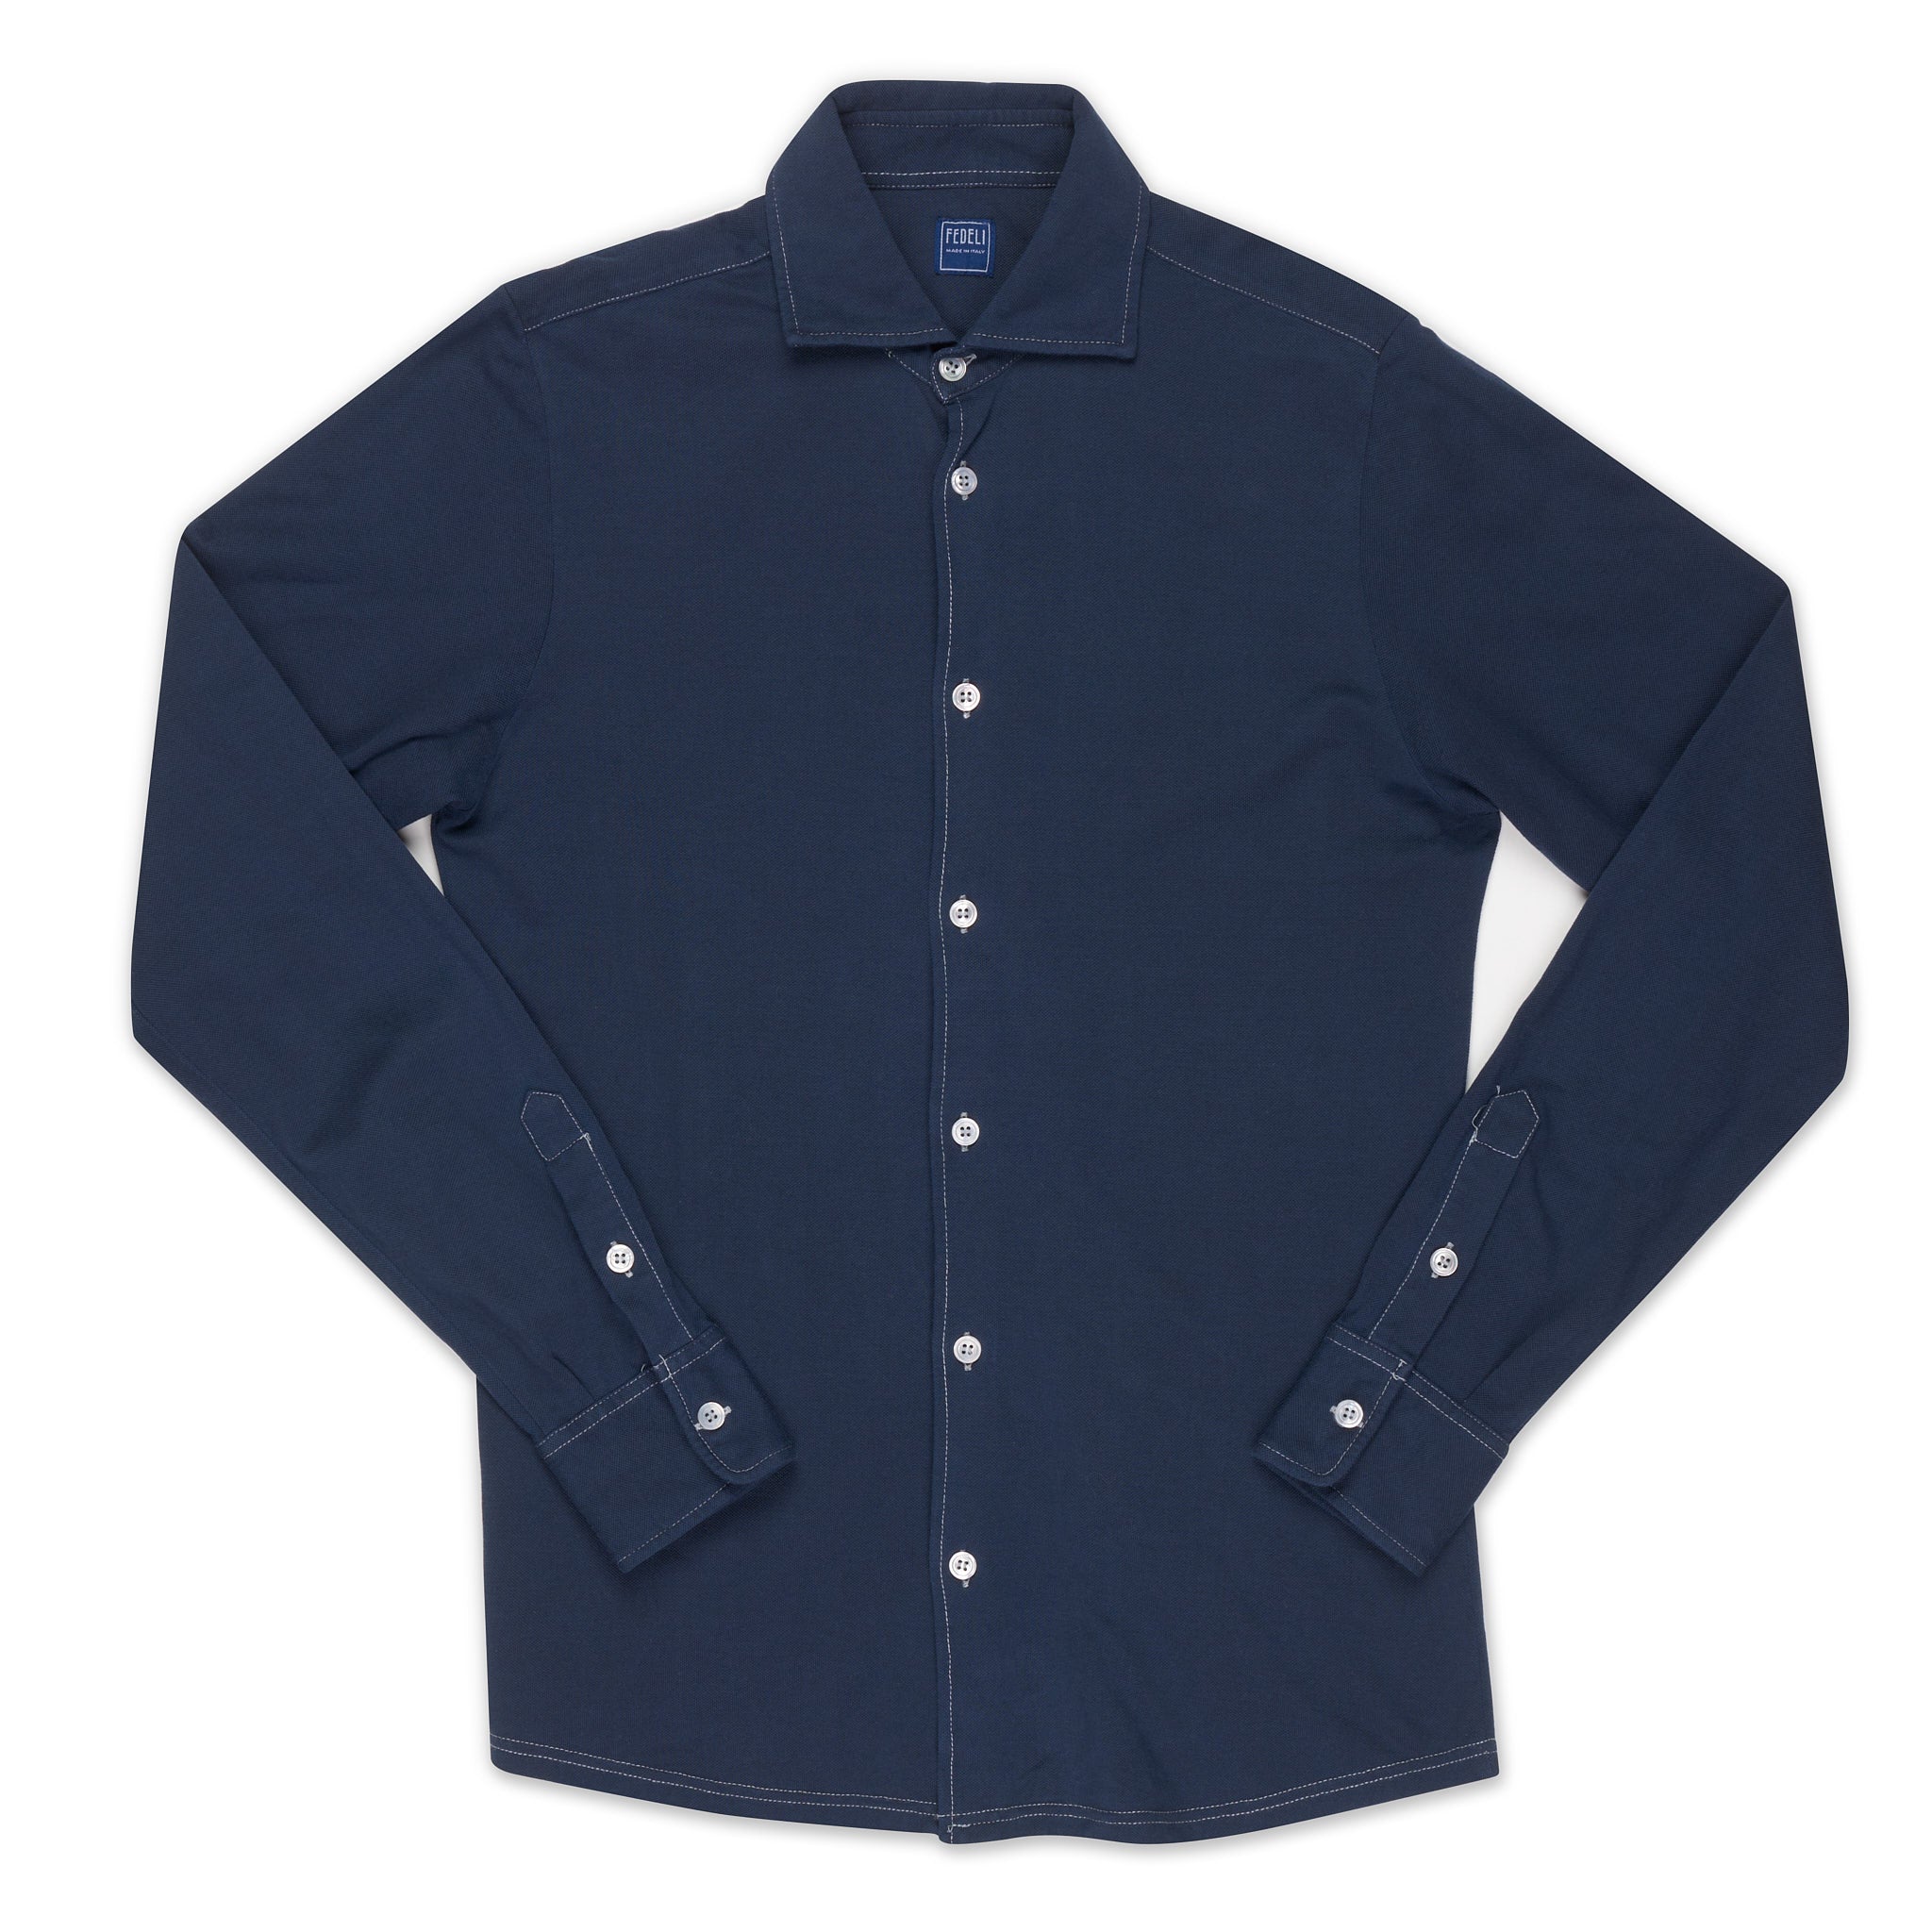 FEDELI "Kaos" Navy Blue Garment Dyed Cotton Pique Polo Shirt 46 NEW XS Slim FEDELI